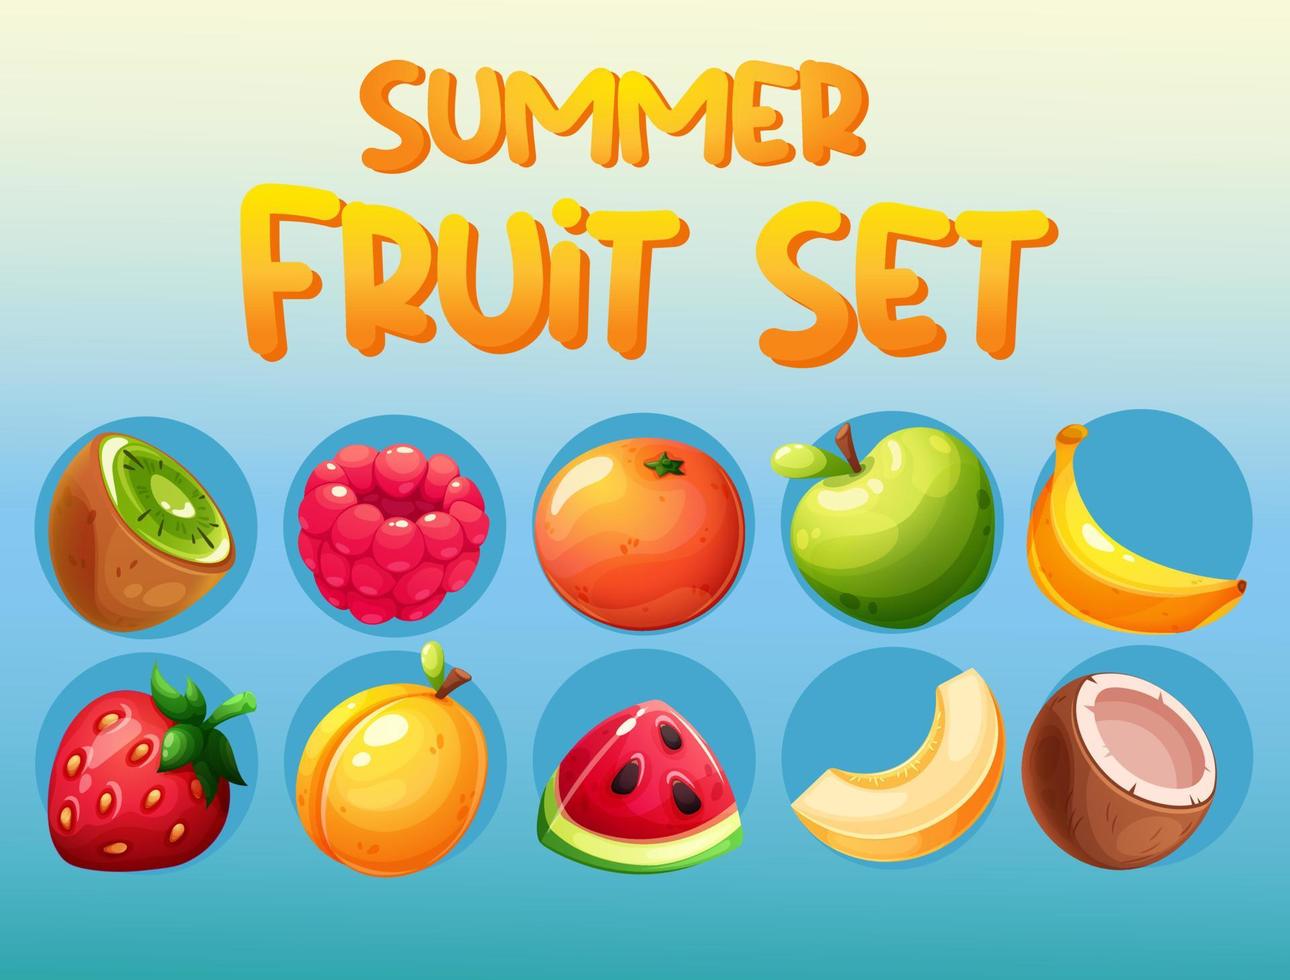 Fruity summer set. Coconut, banana, kiwi, raspberry, orange, apple, strawberry, apricot, melon, watermelon vector